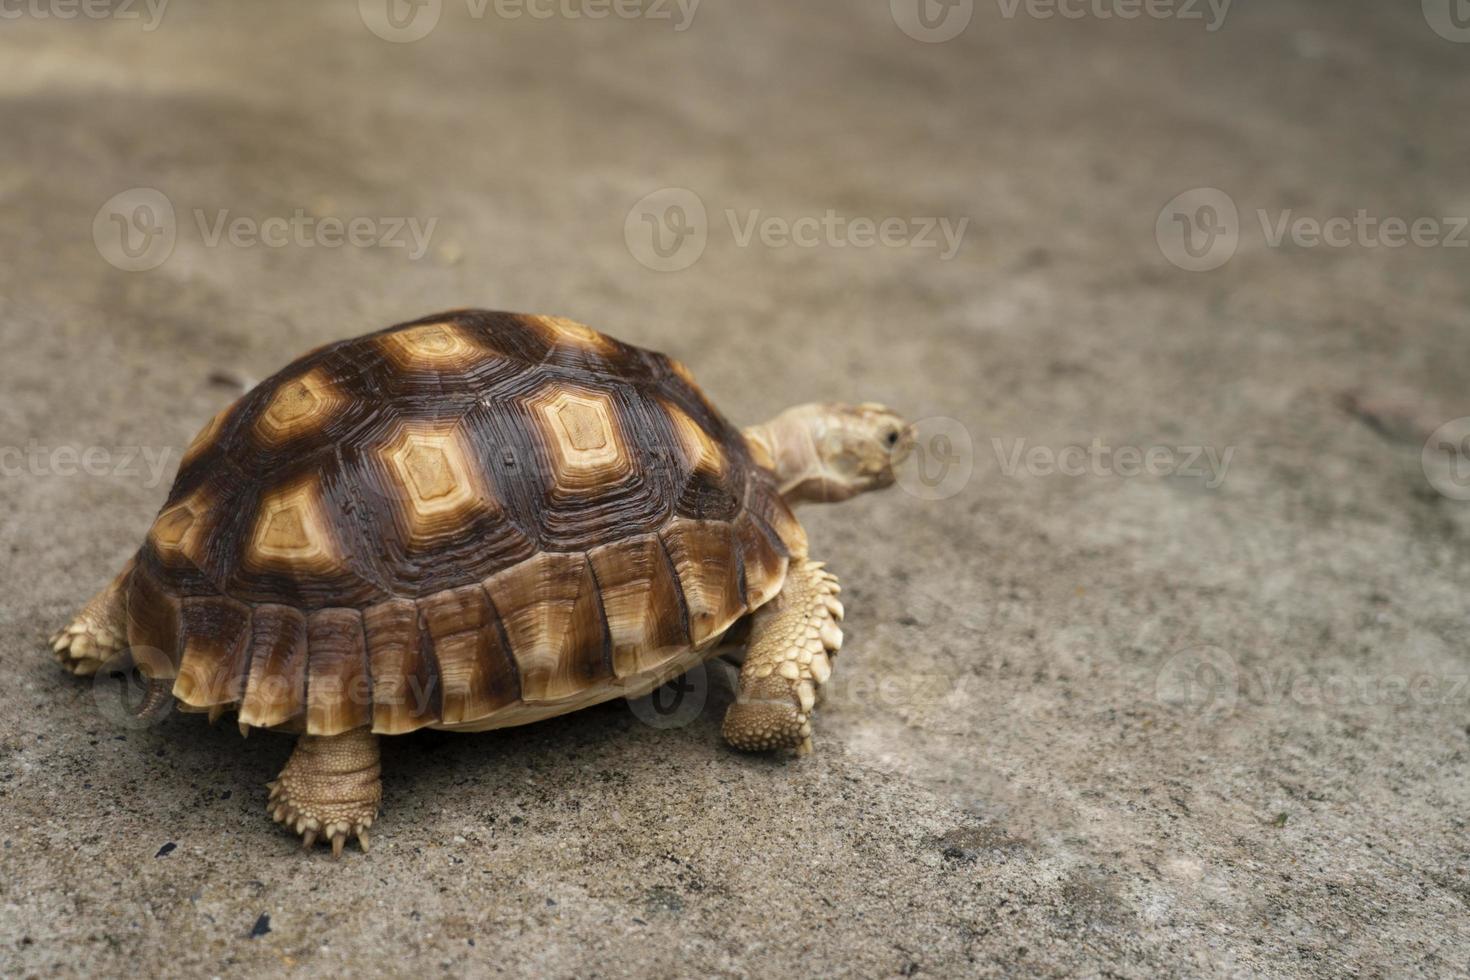 Turtle Centrochelys sulcata on concrete. cute pet turtle. animal care and treatment concept photo